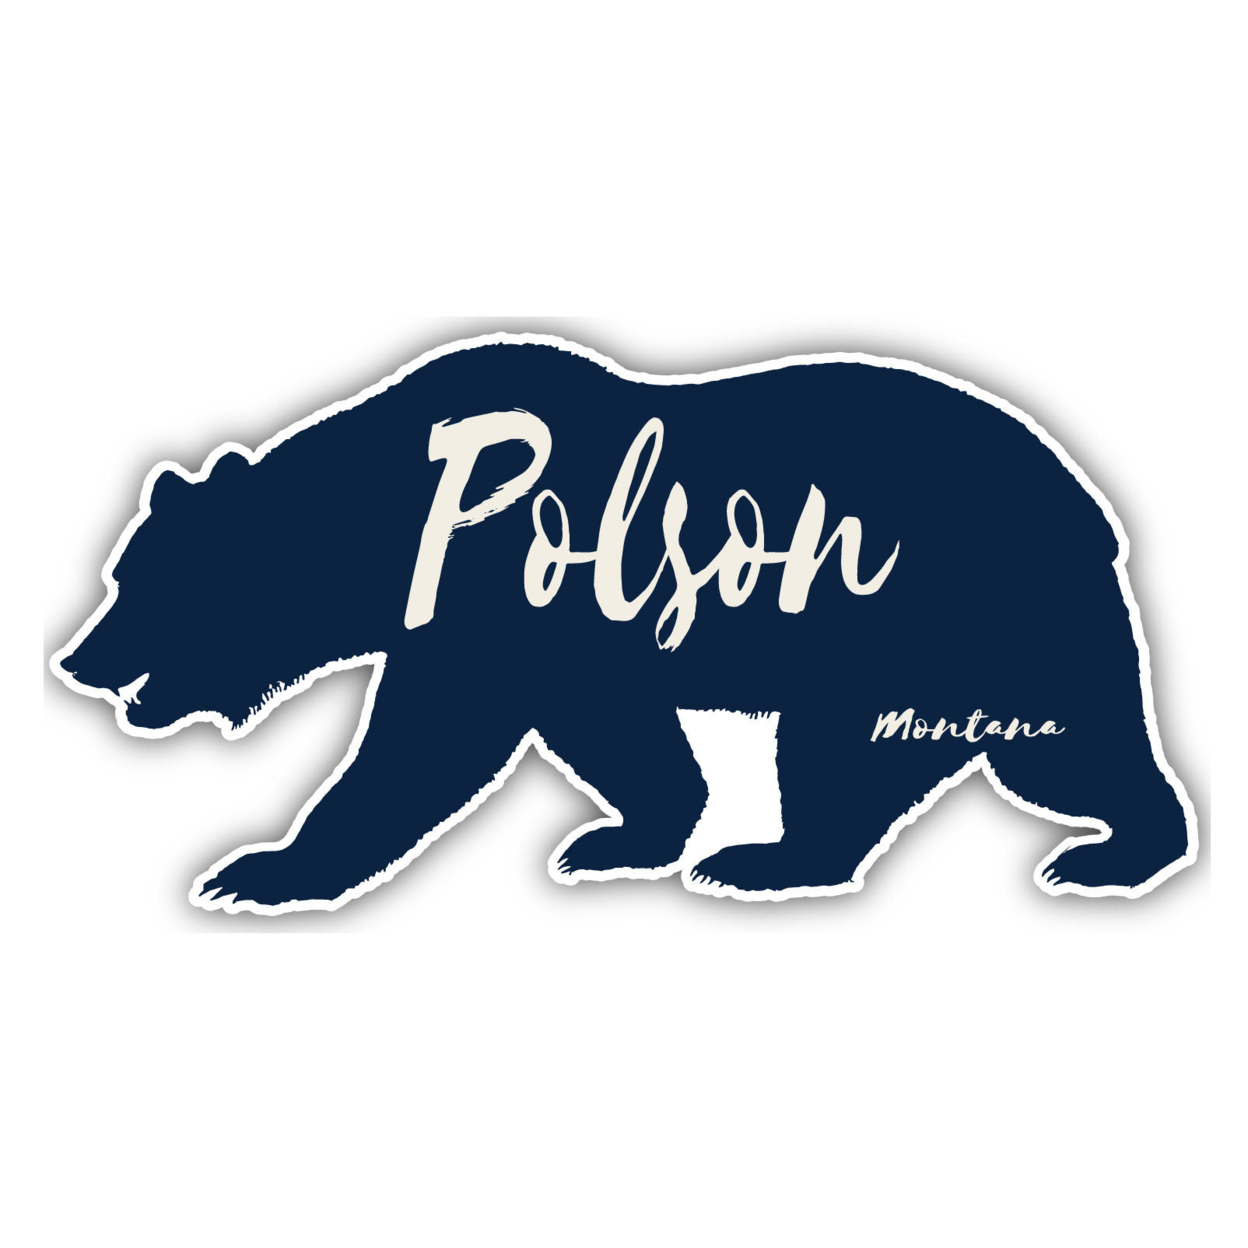 Polson Montana Souvenir Decorative Stickers (Choose Theme And Size) - Single Unit, 2-Inch, Bear